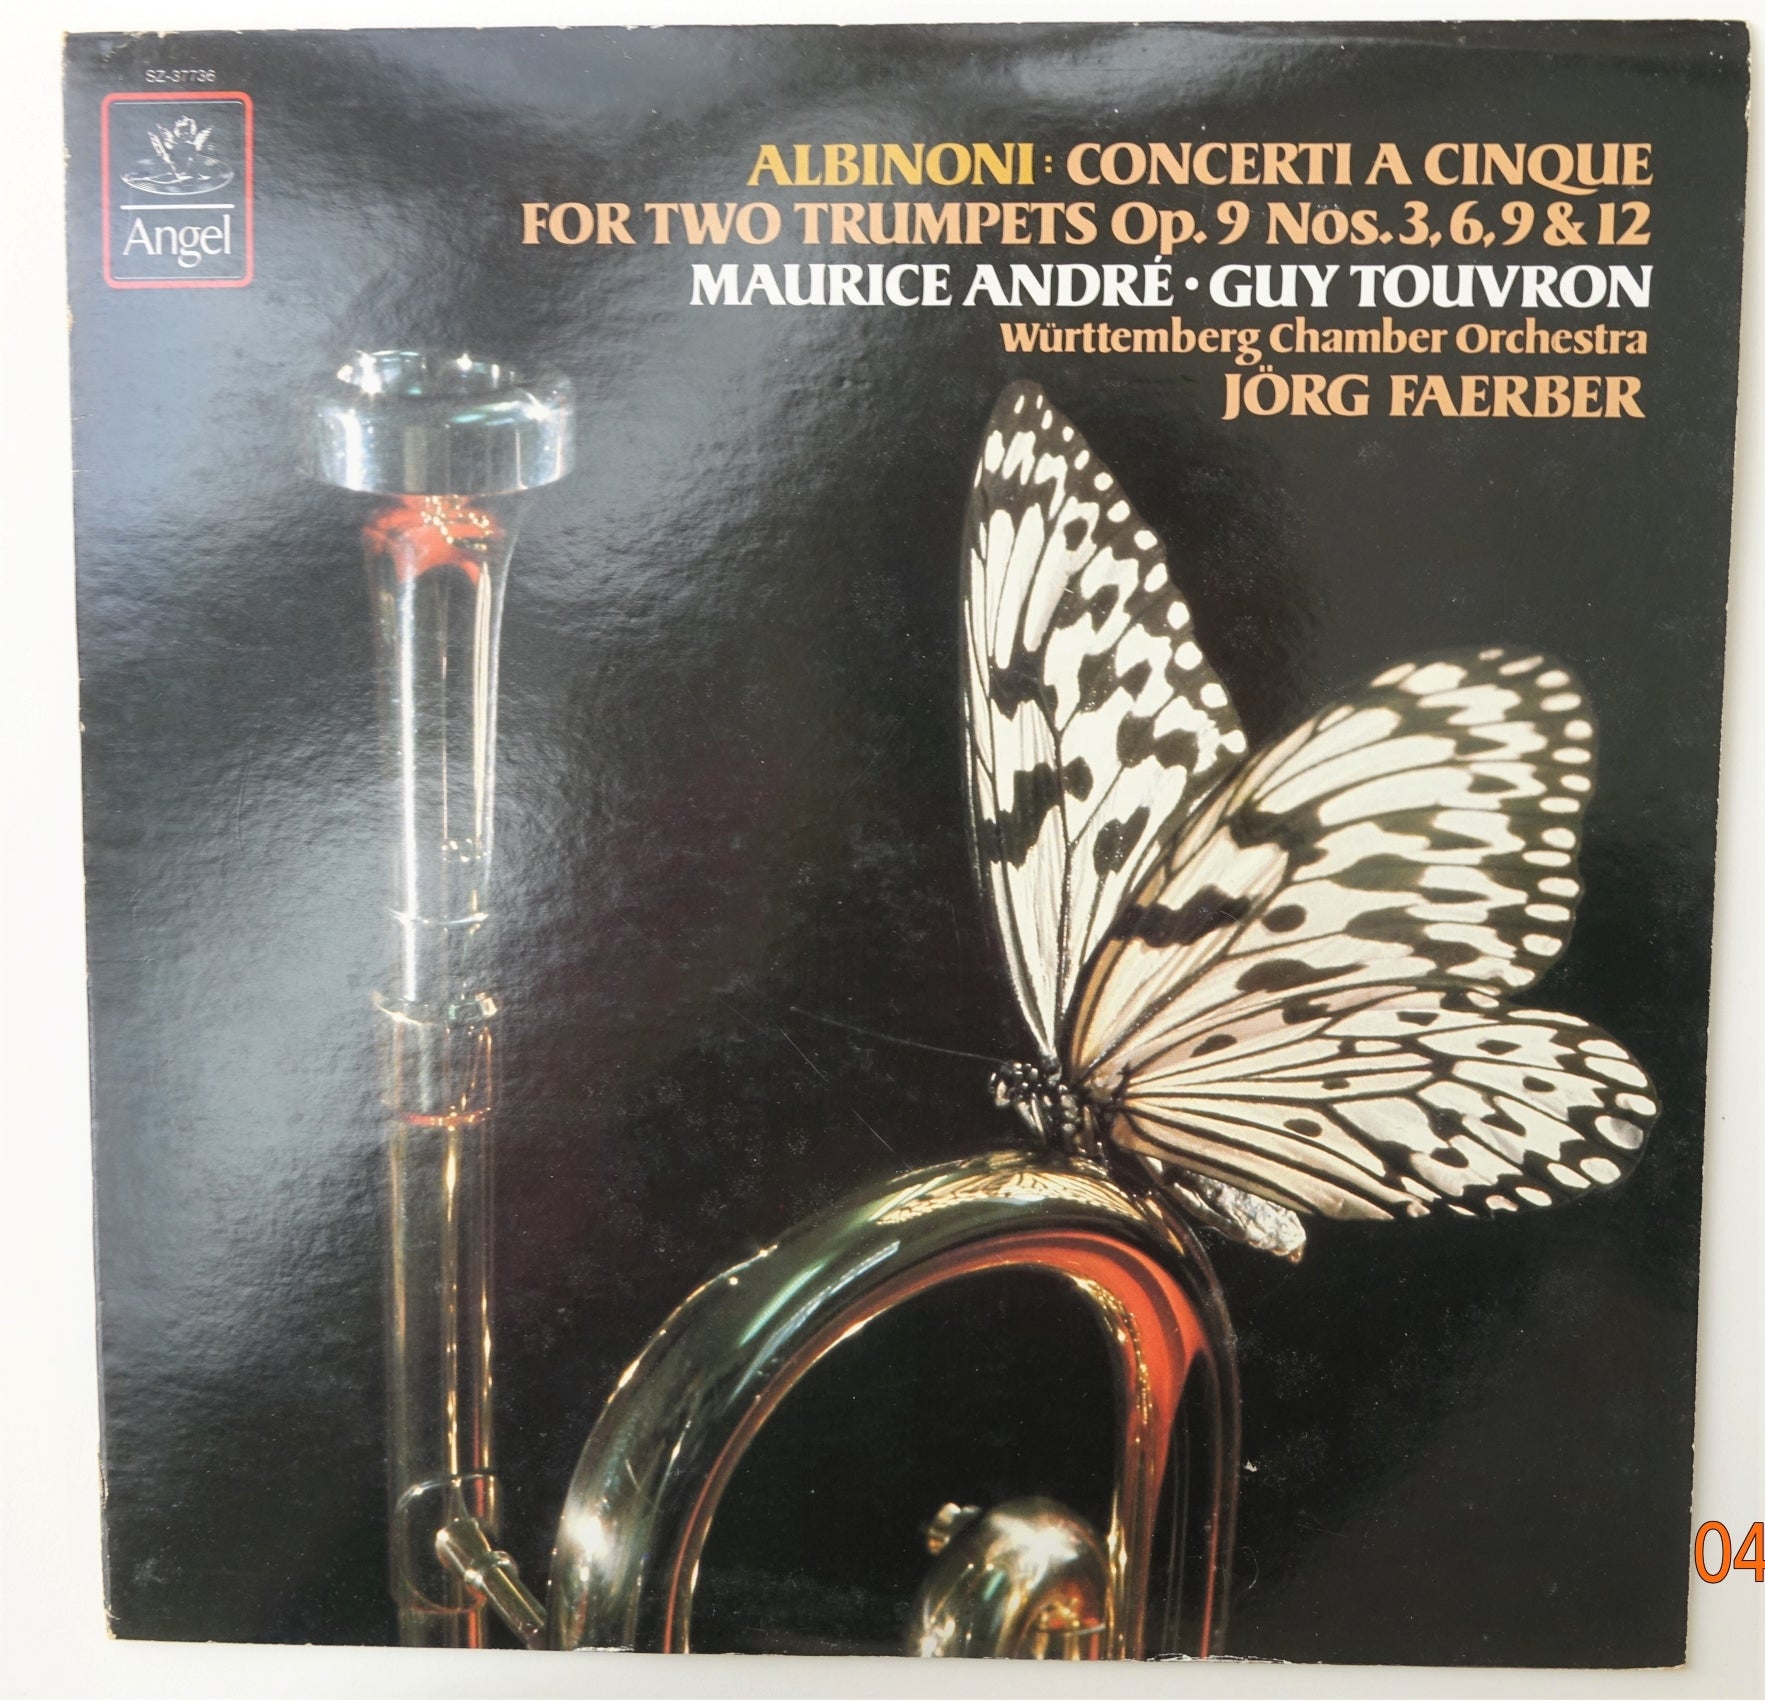 ANG010: Albinoni: Concerti a Cinque for Two Trumpets Op. 9 Nos. 3.6.9 & 12